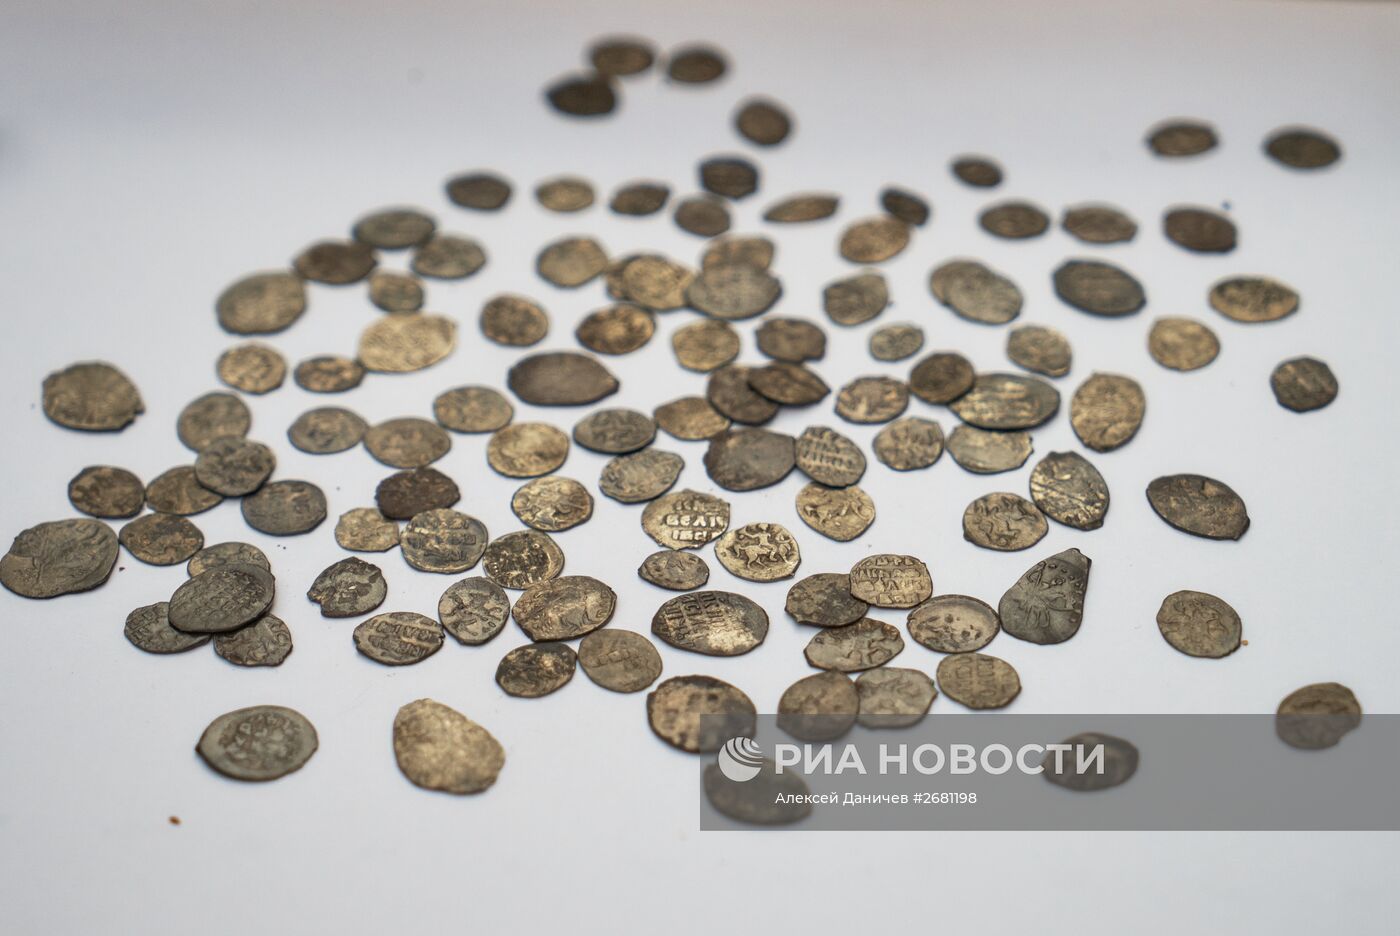 Археологи нашли клад времен Ивана Грозного на территории крепости Старой Ладоги